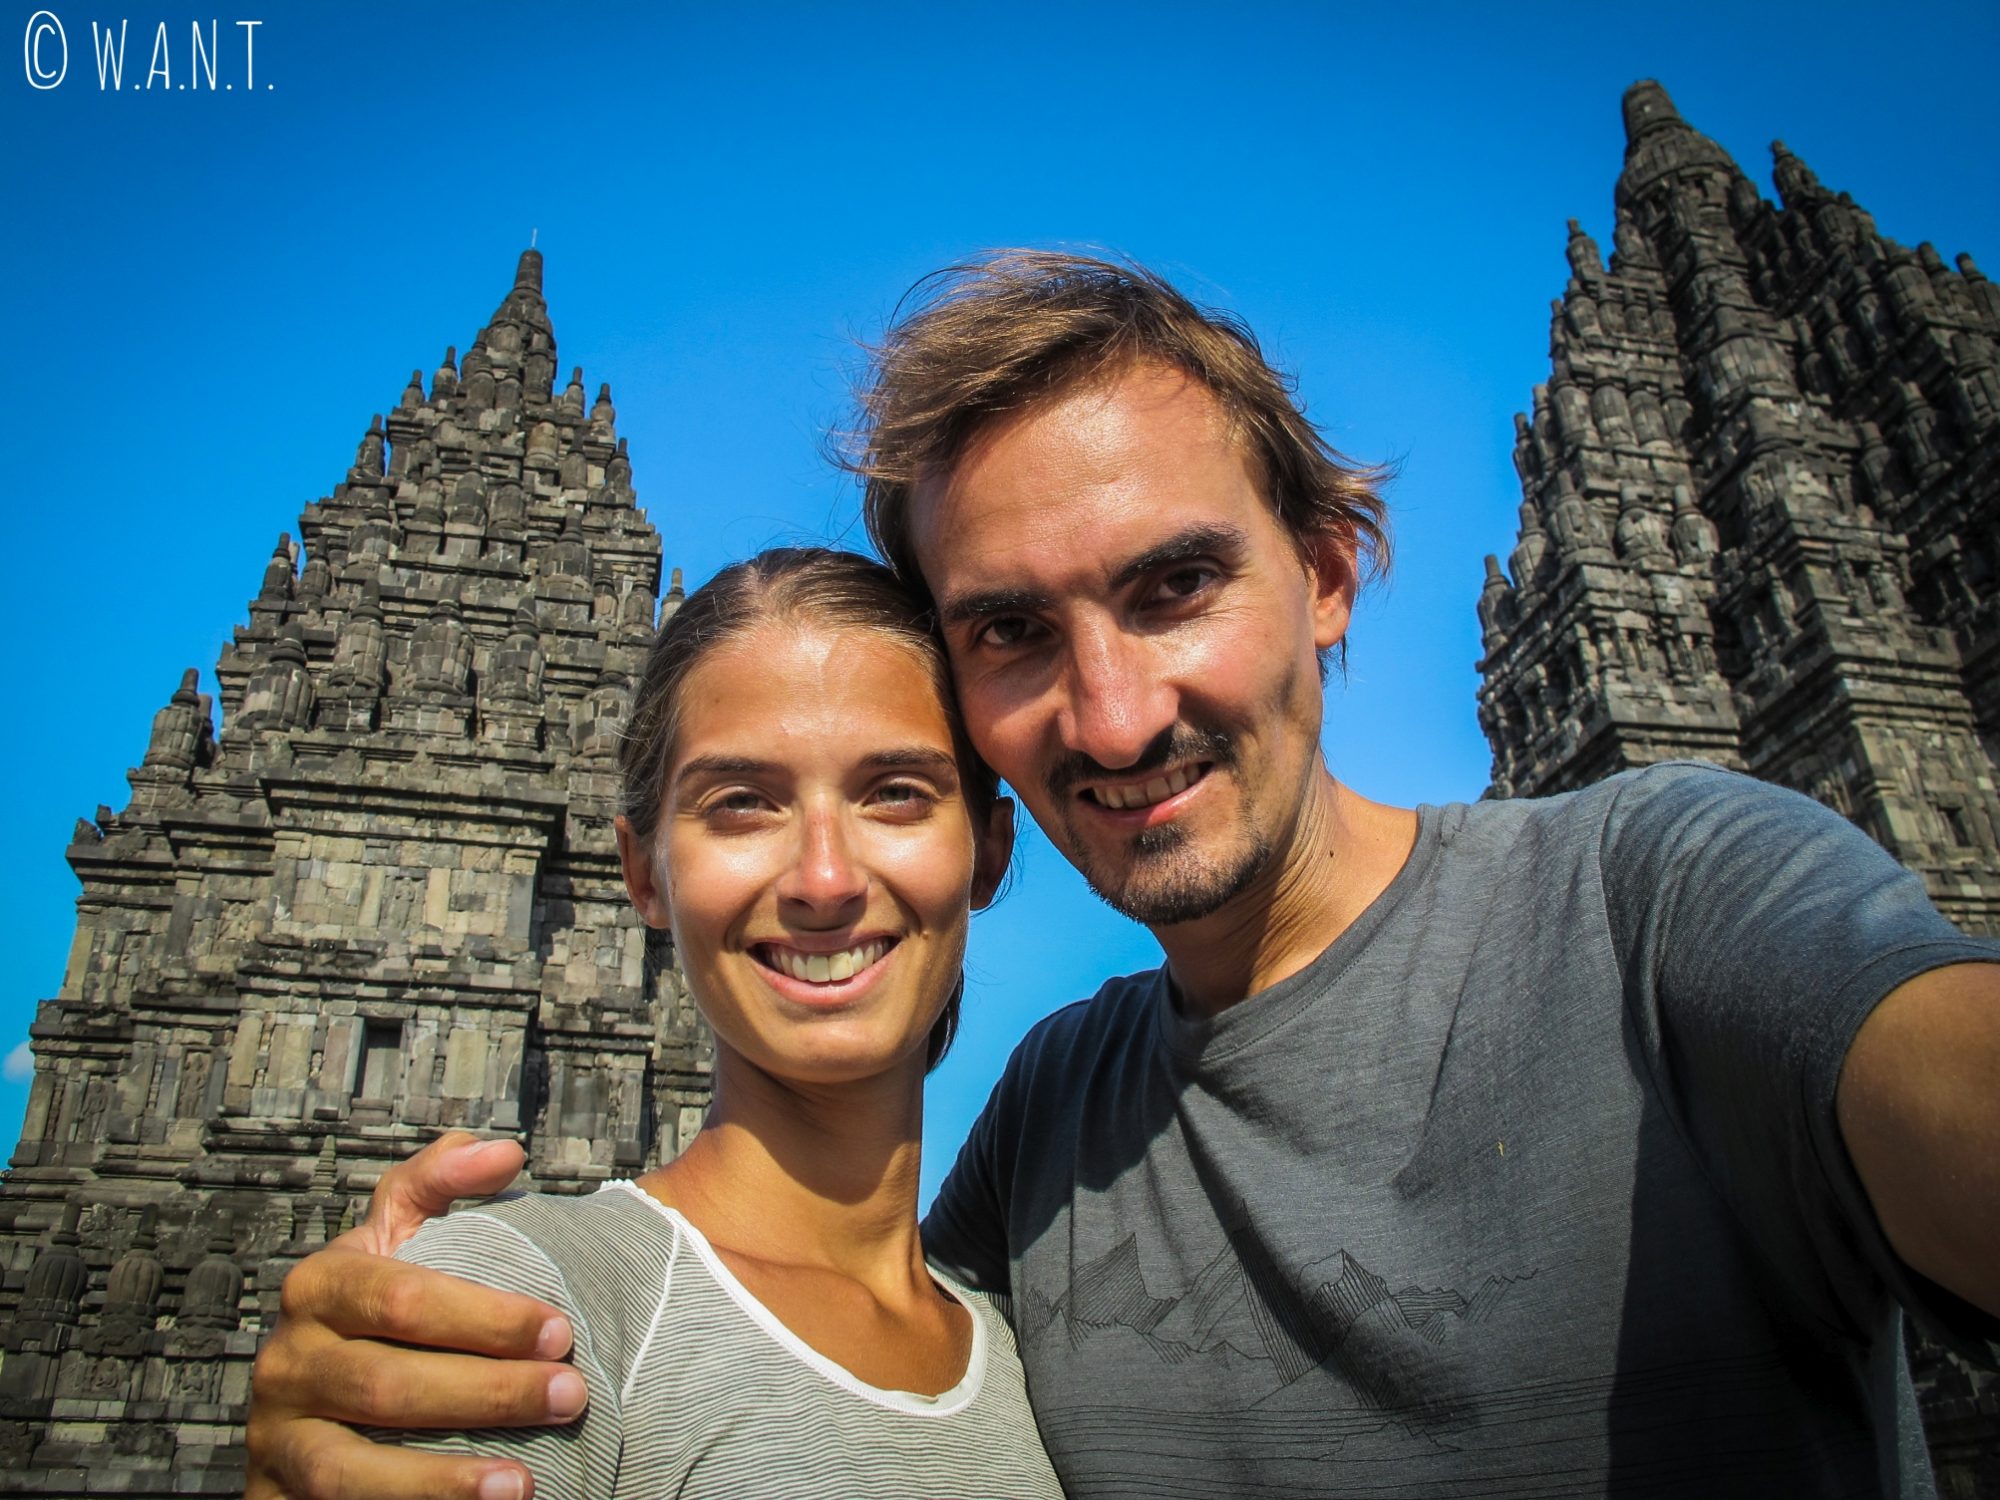 Selfie au temple de Prambanan